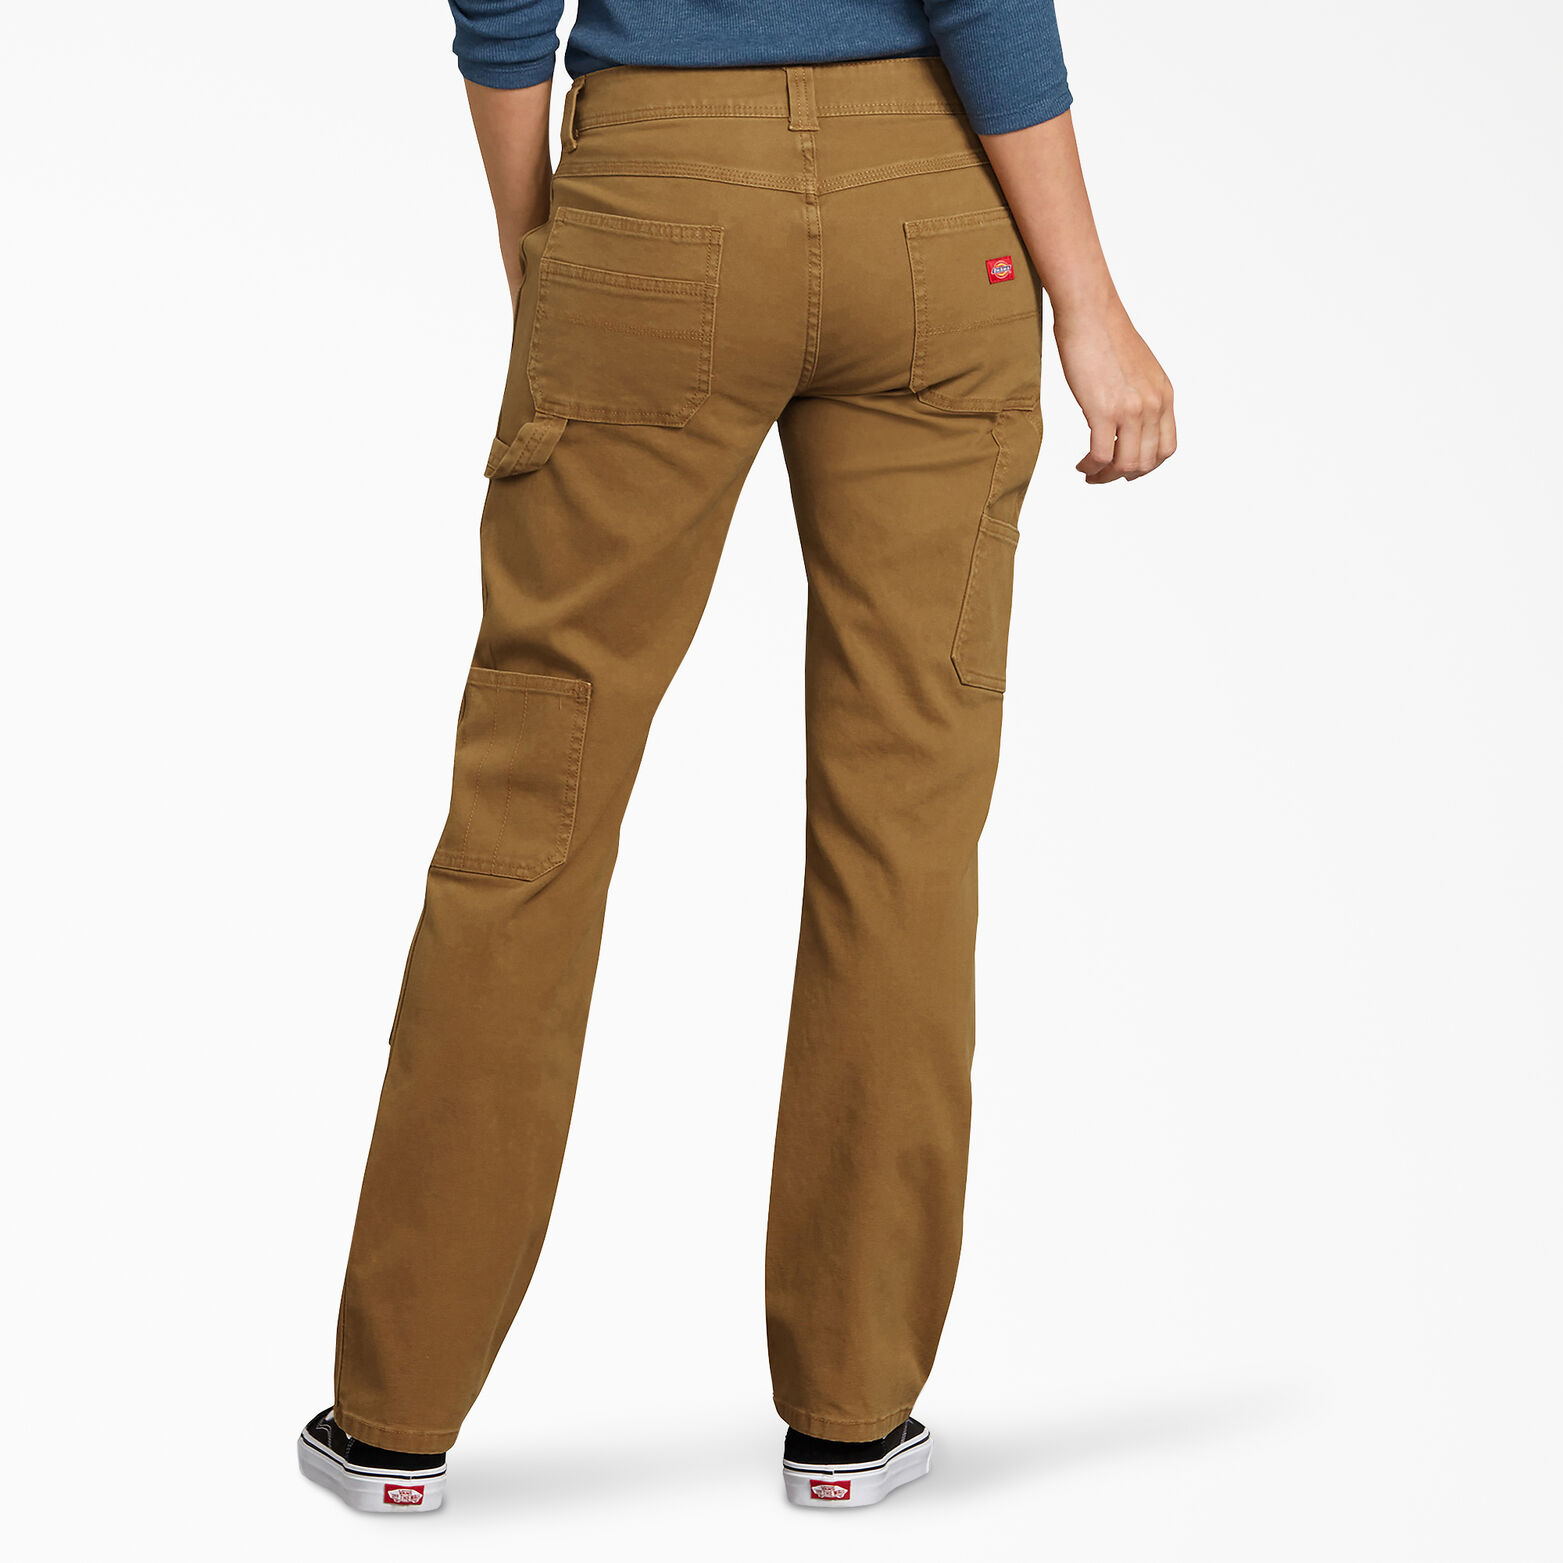 Women's Pants - Stretch Carpenter Pants |